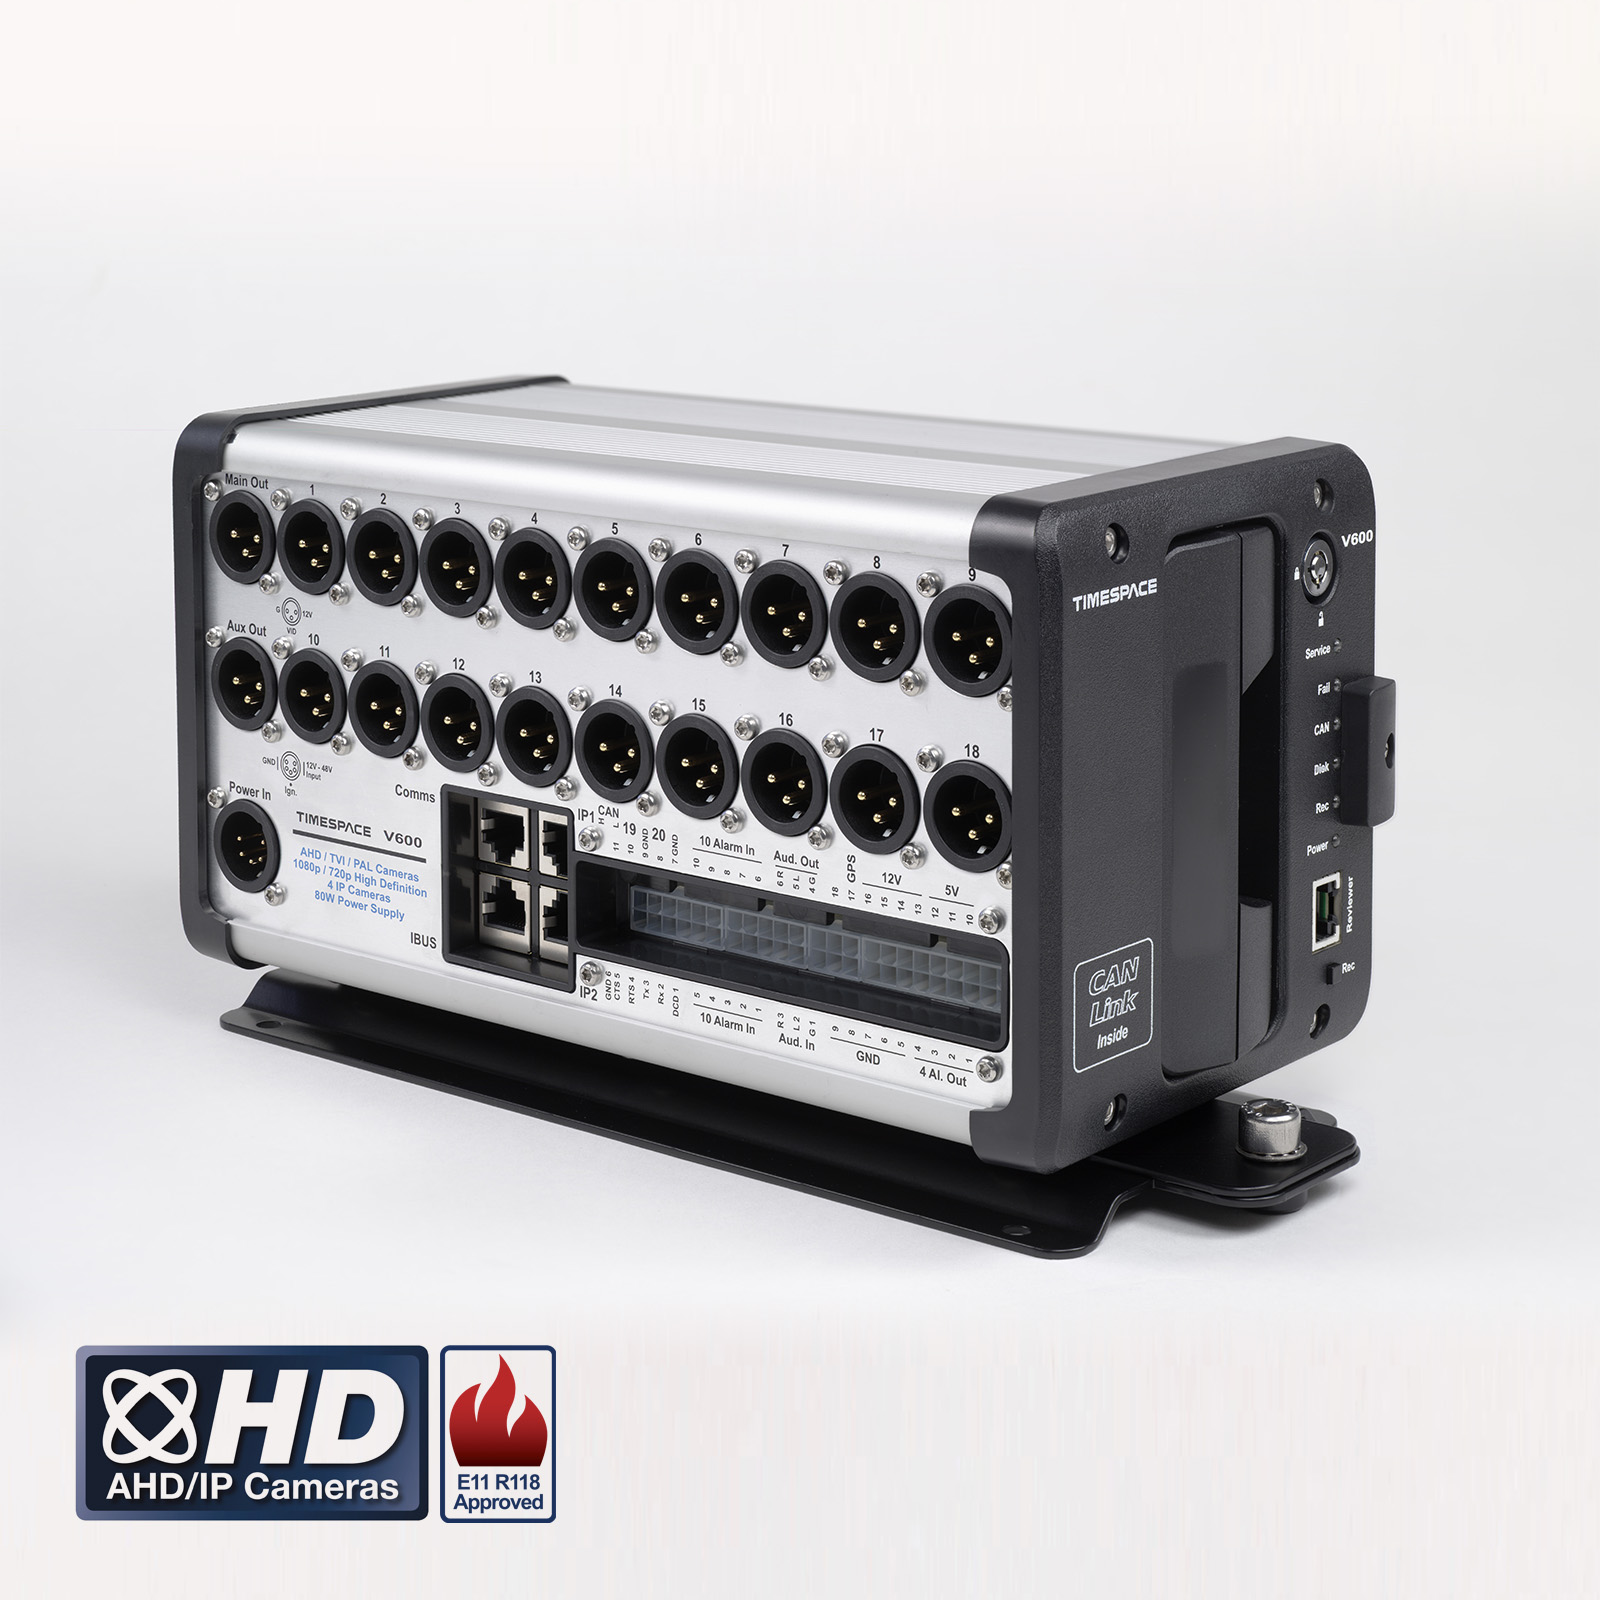 Timespace V600 digital video recorder